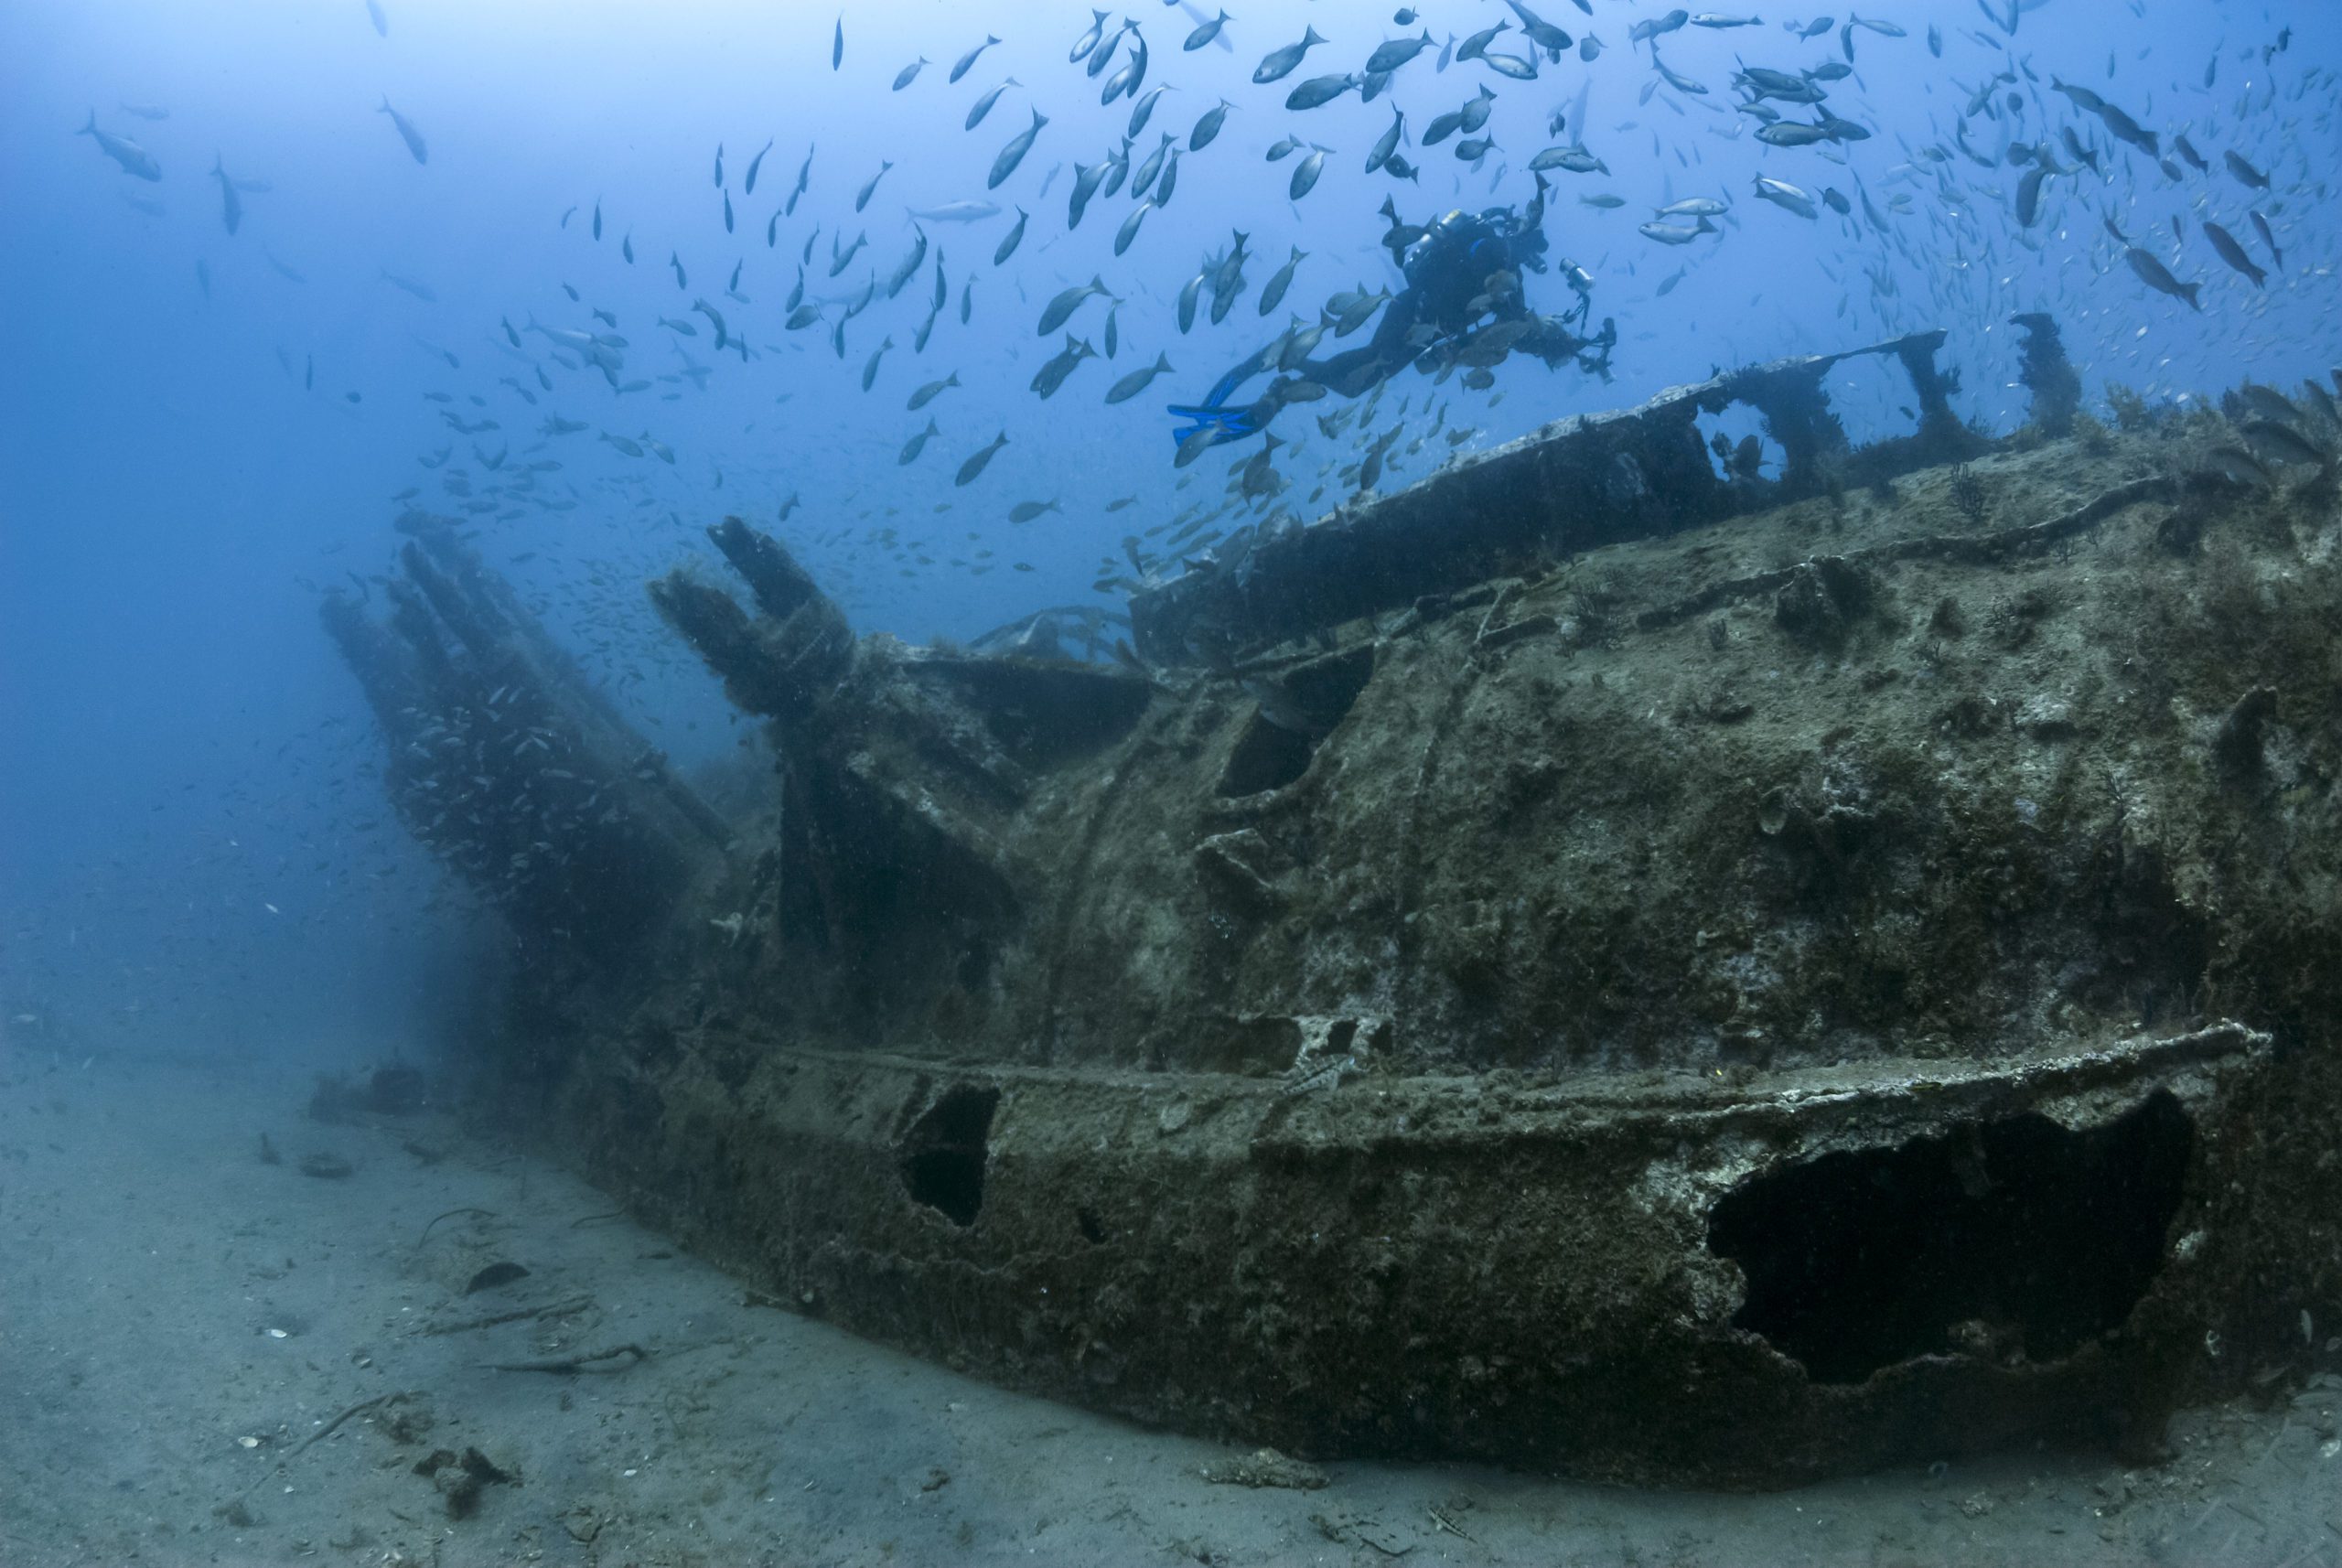 U-352 German U-boat of the North Carolina Coast